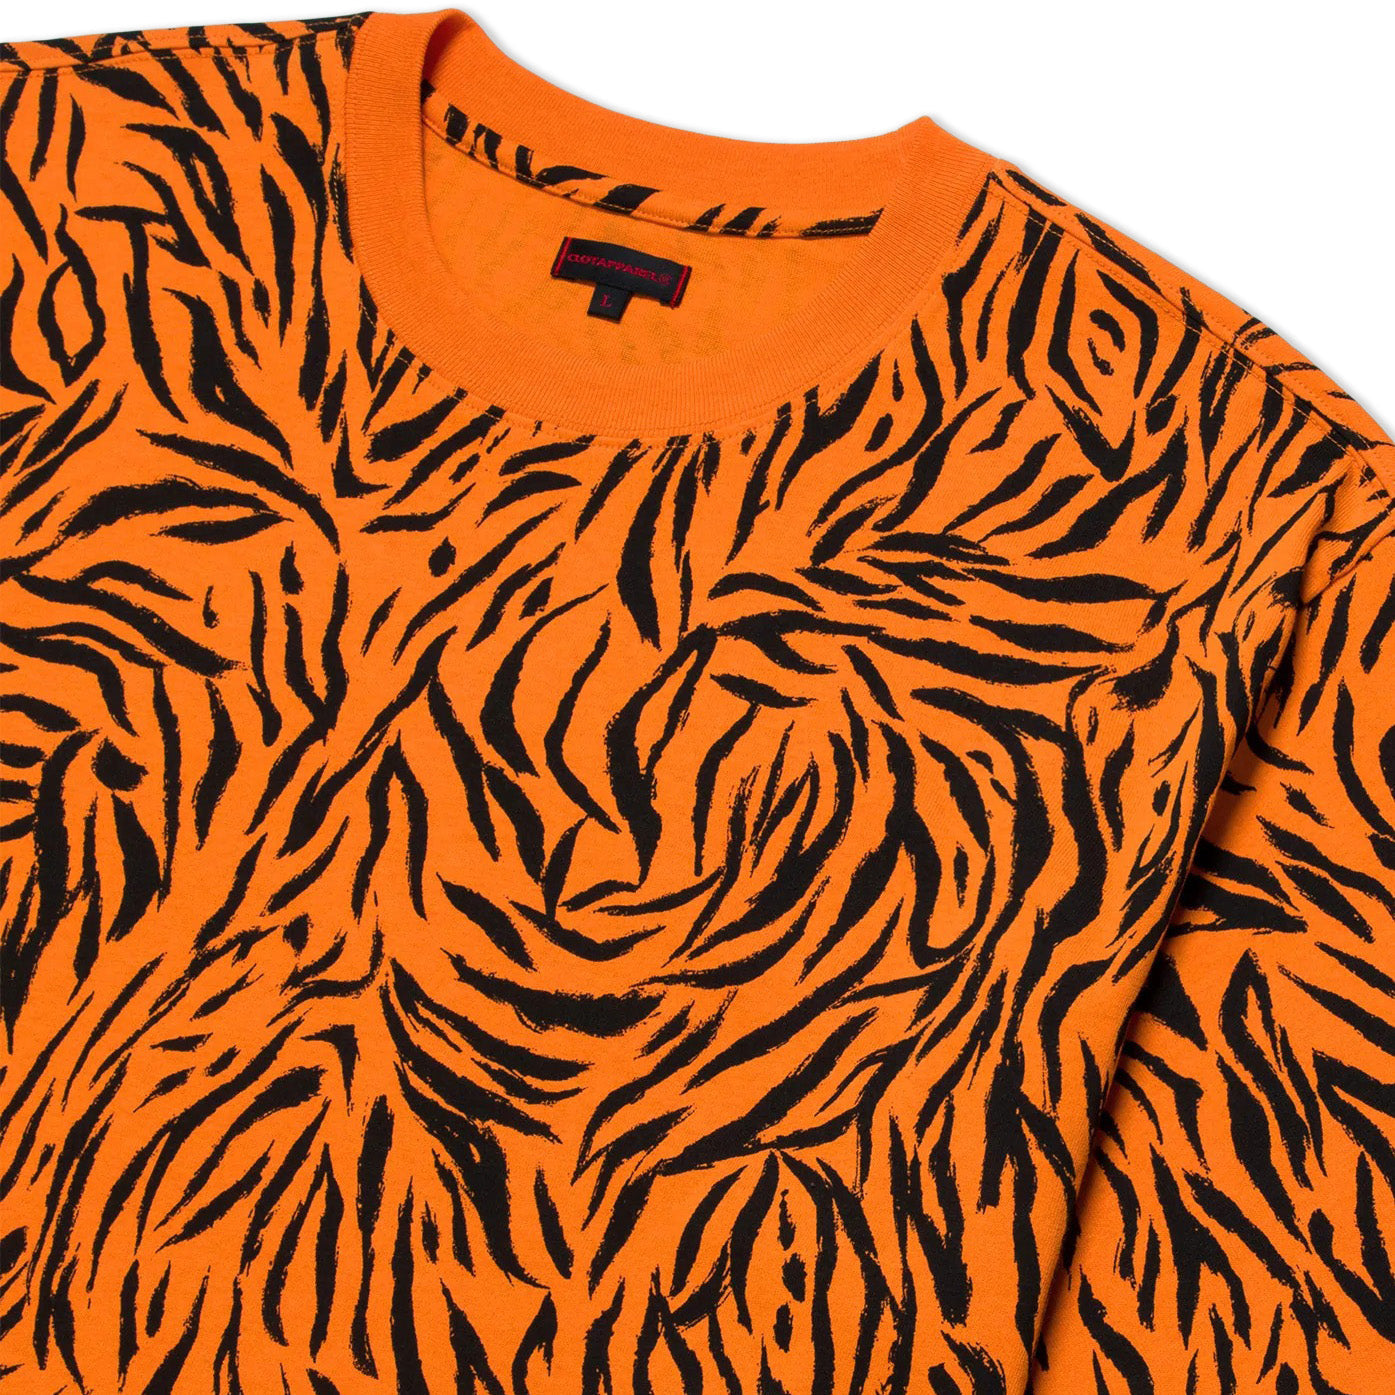 CLOT Men Tiger Stripe Tee Orange - T-SHIRTS - Canada